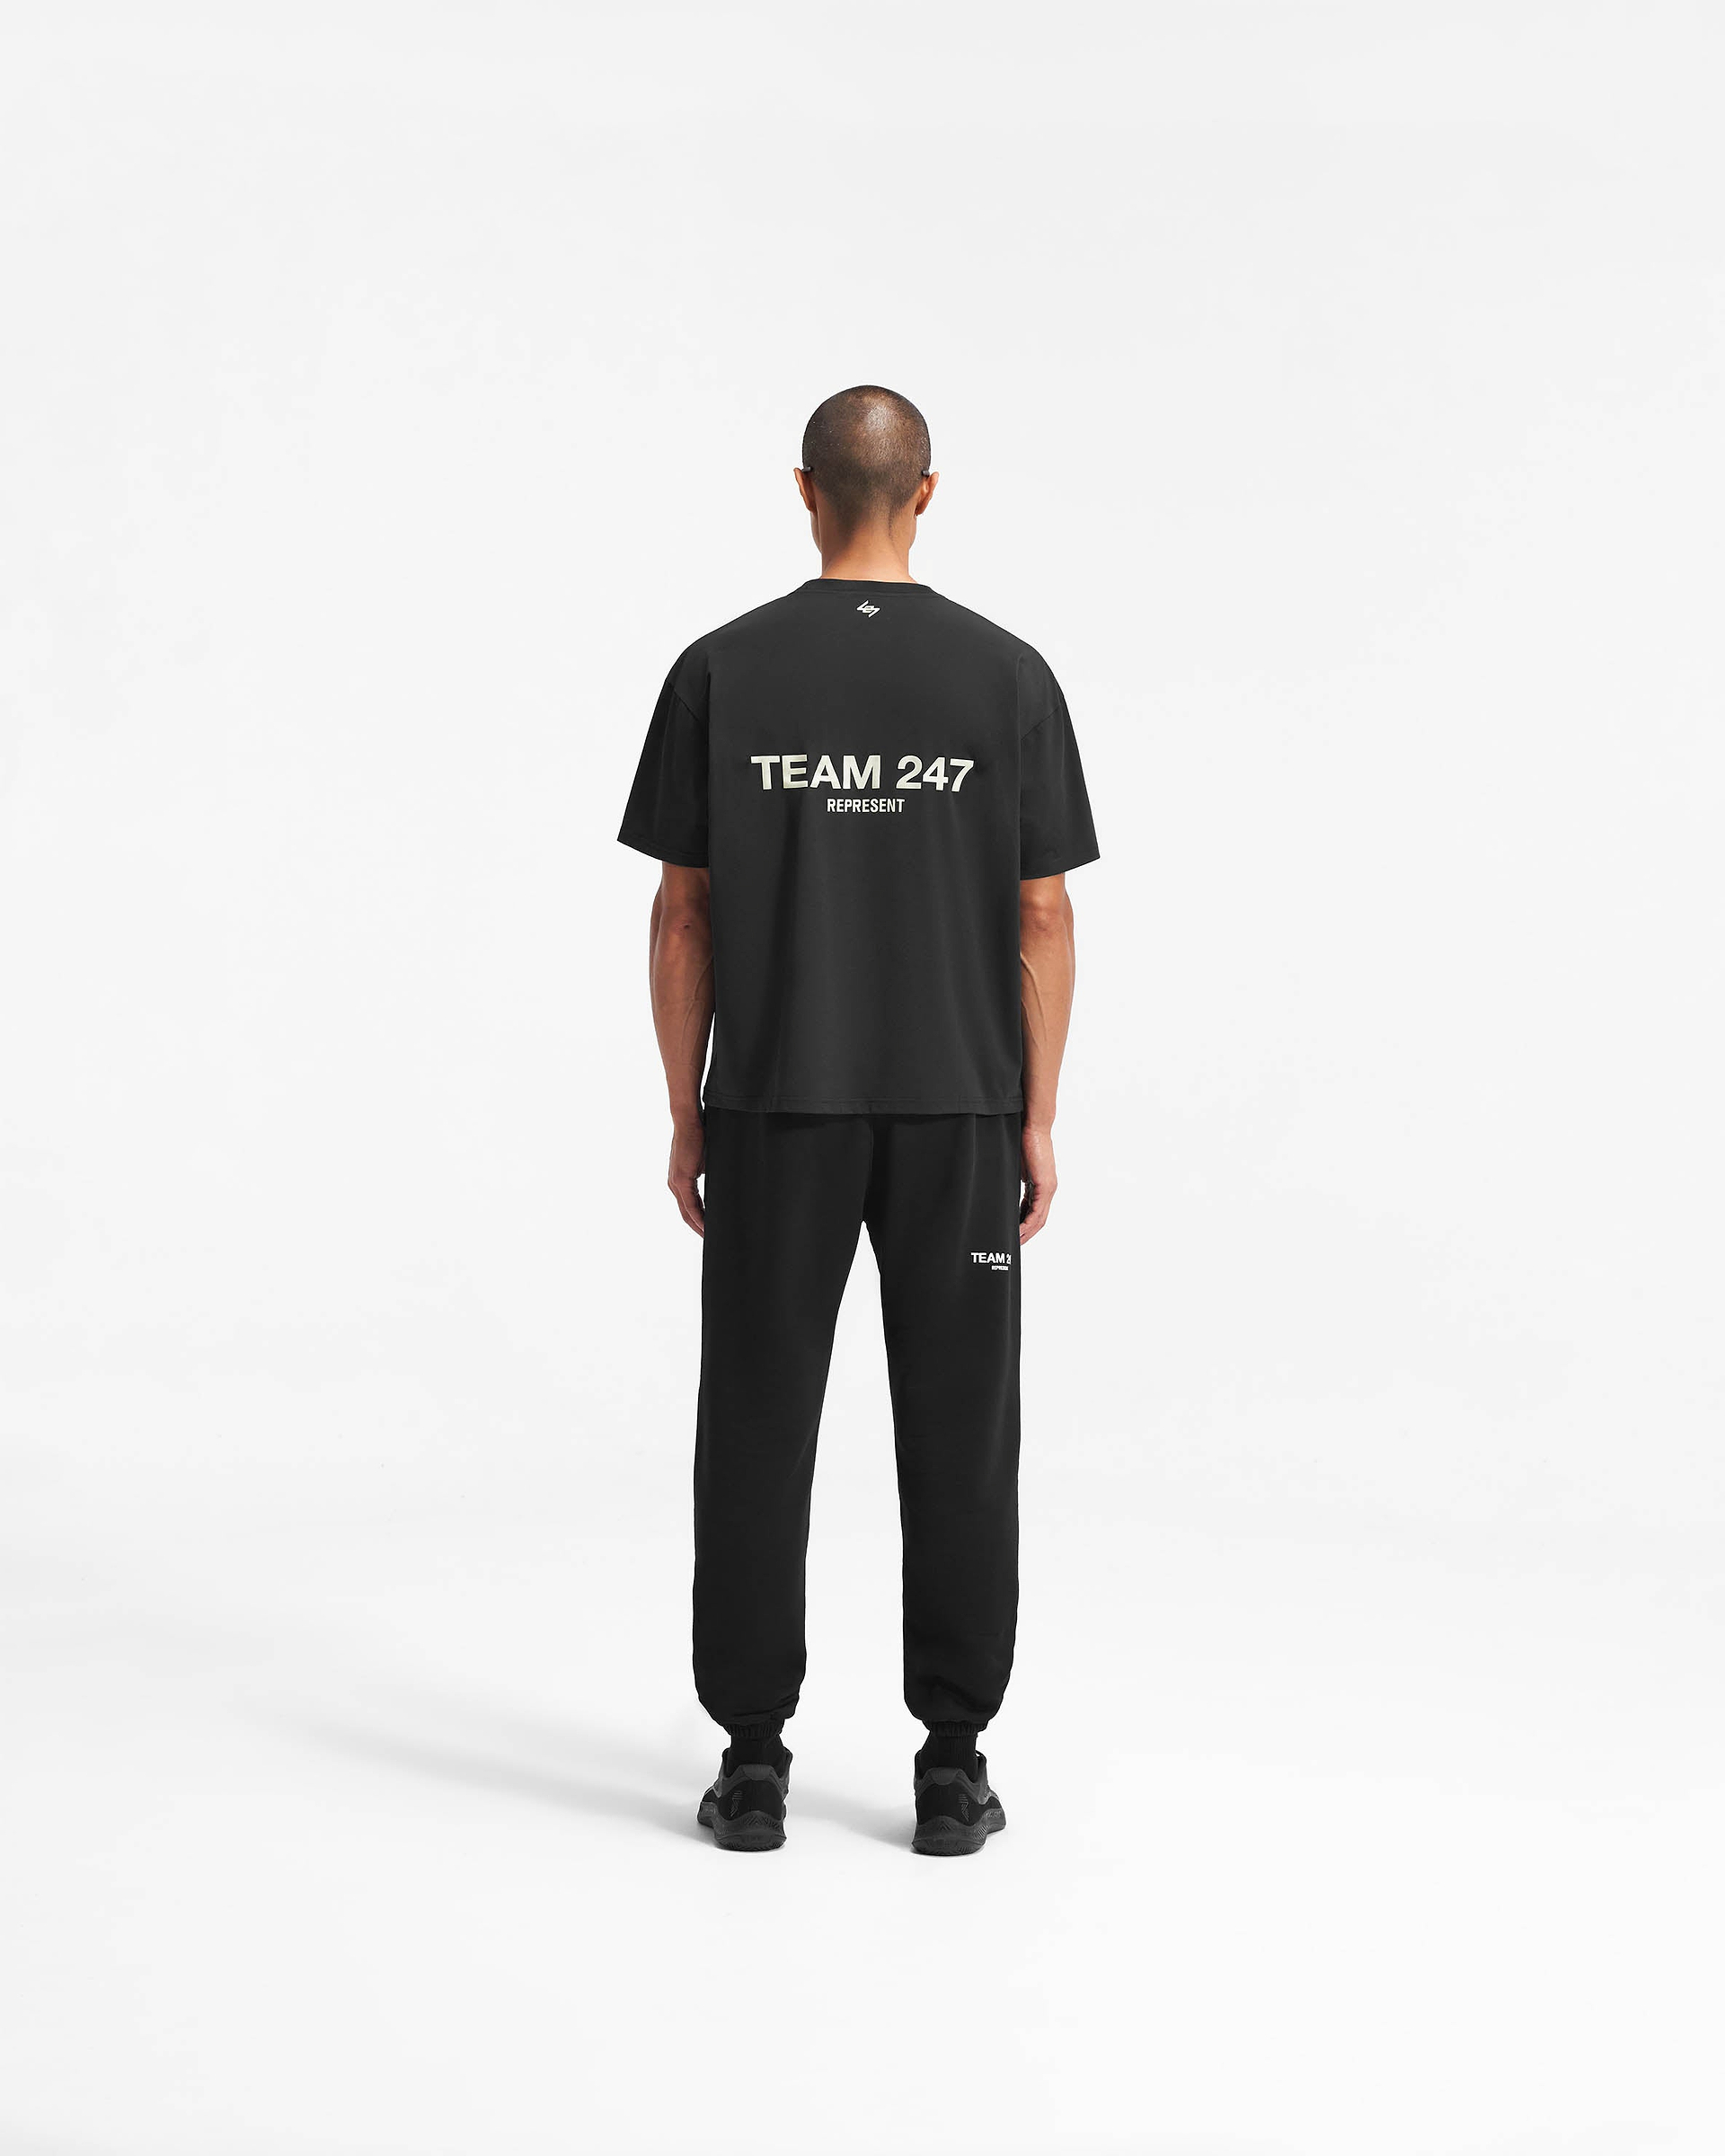 Team 247 Oversized T-Shirt CLO Black | REPRESENT 